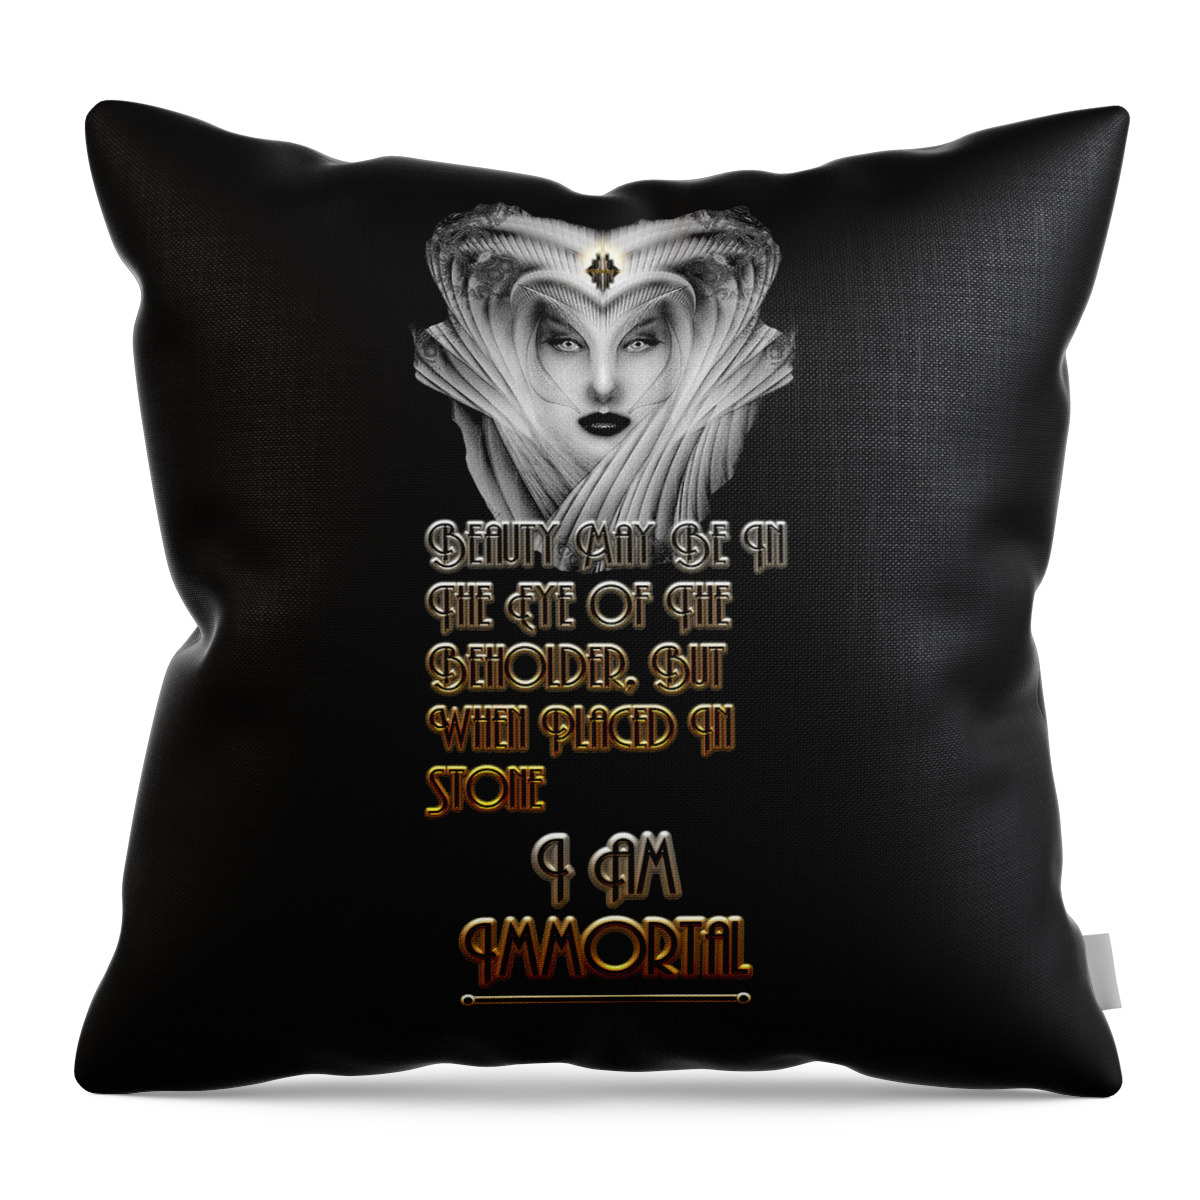 Beauty Immortal Throw Pillow featuring the digital art Beauty Immortal by Rolando Burbon